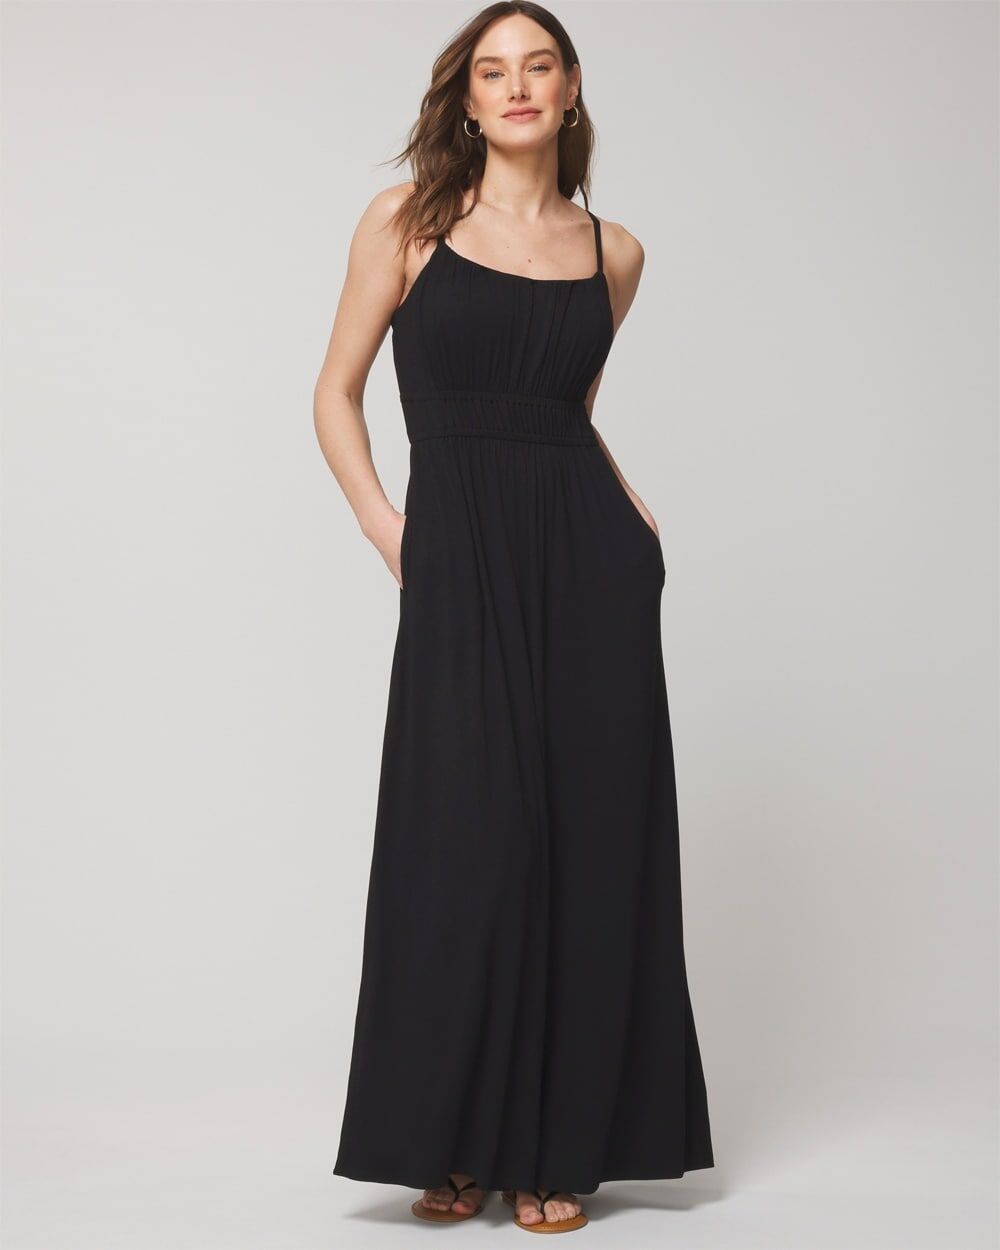 Women's Soft Jersey Shirred Bodice Maxi Bra Dress in Black size 2XL   Soma - Women - Black - 2XL